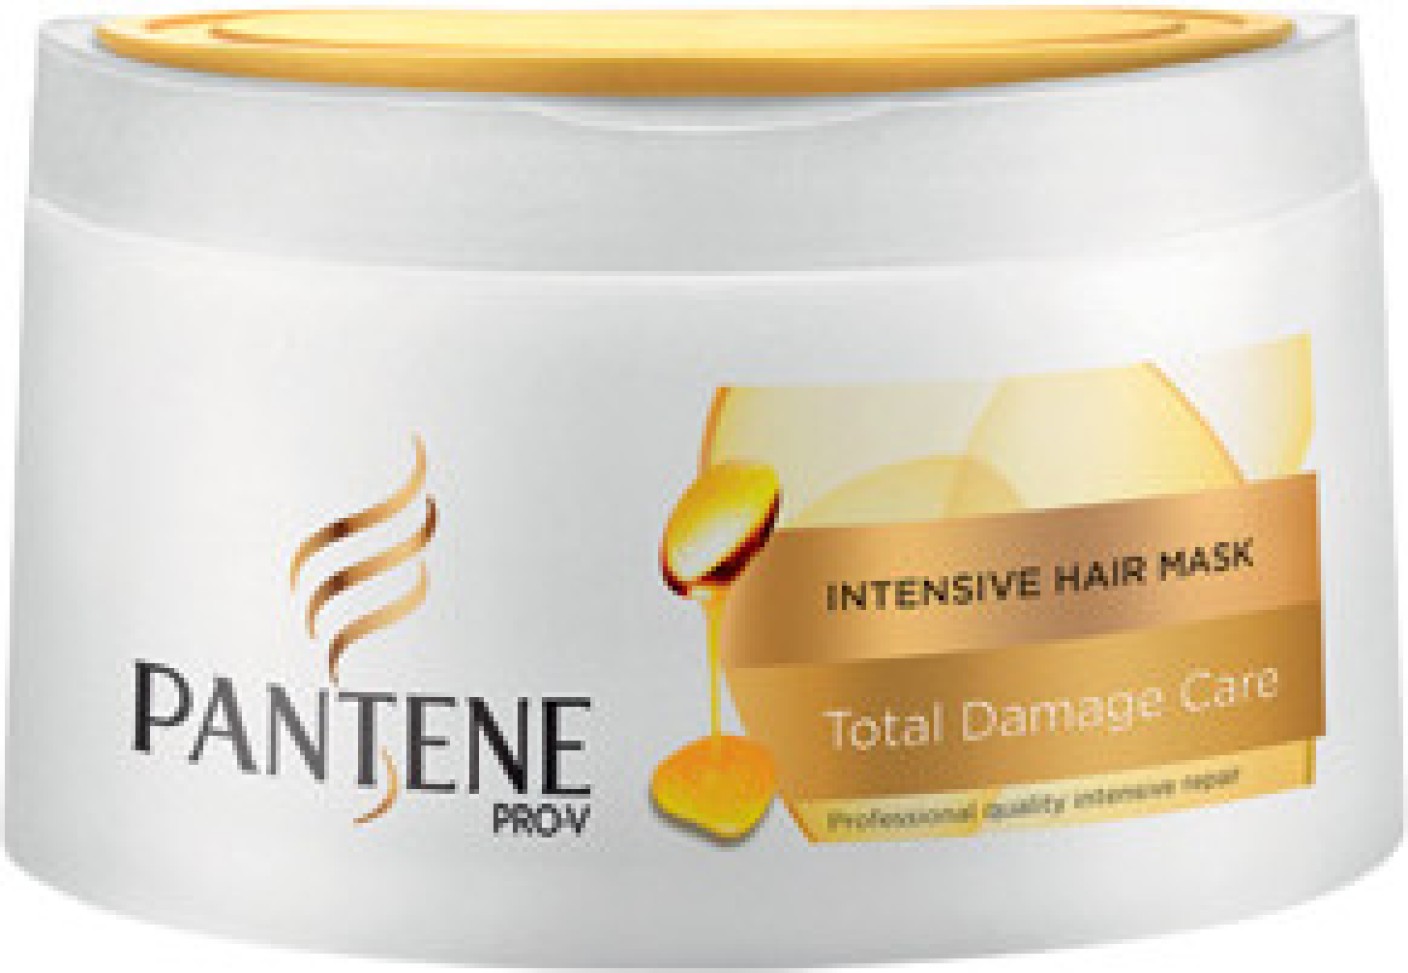 pantene intensive hair mask review